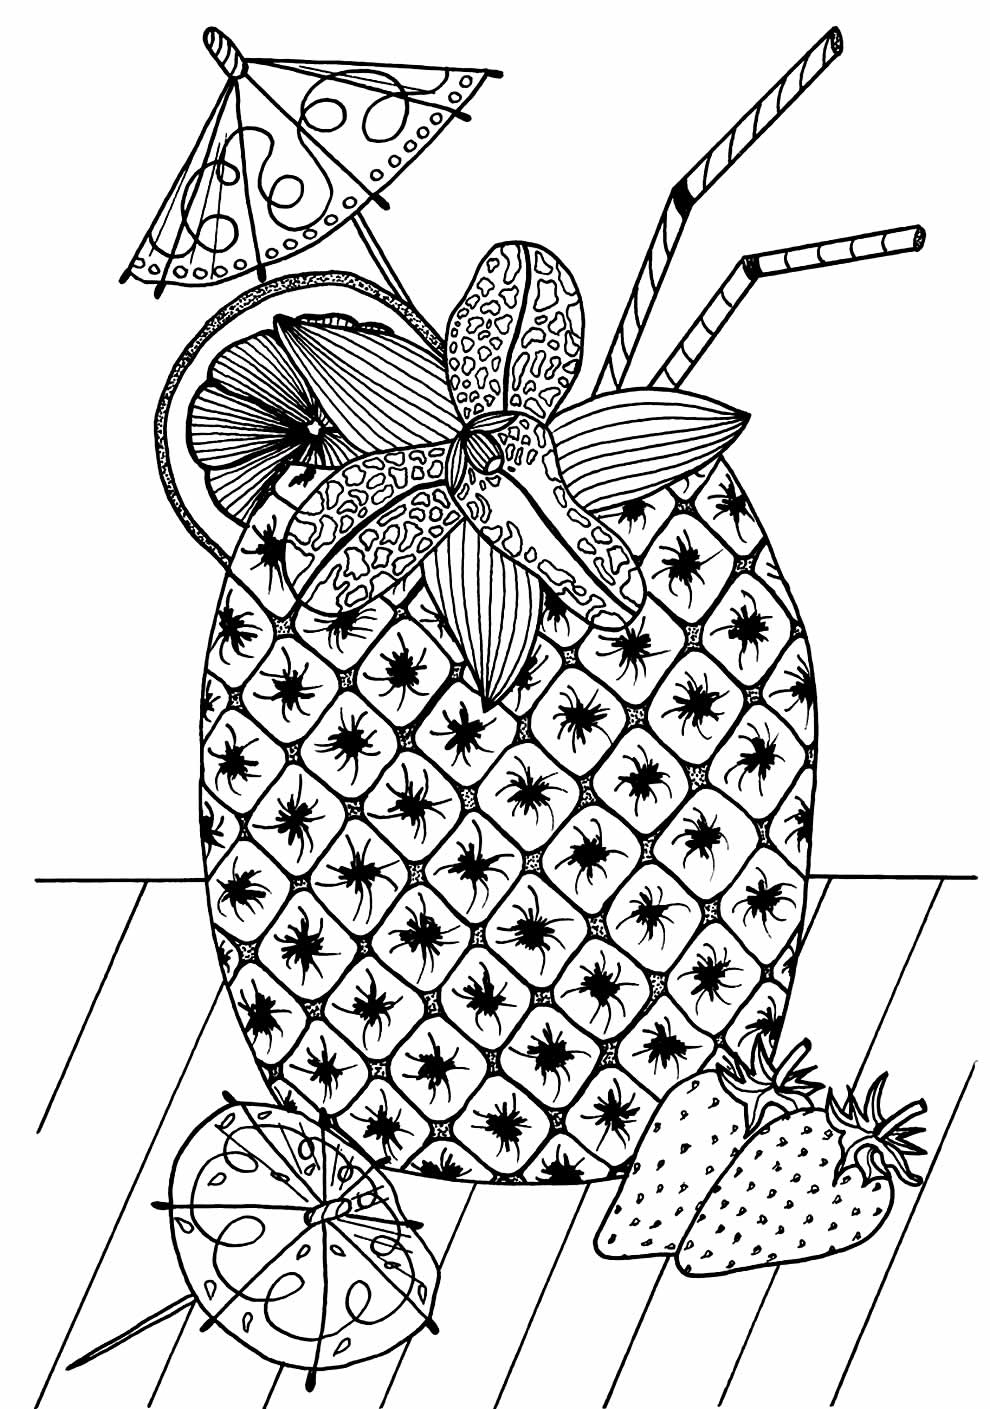 Desenho de abacaxi para imprimir e colorir